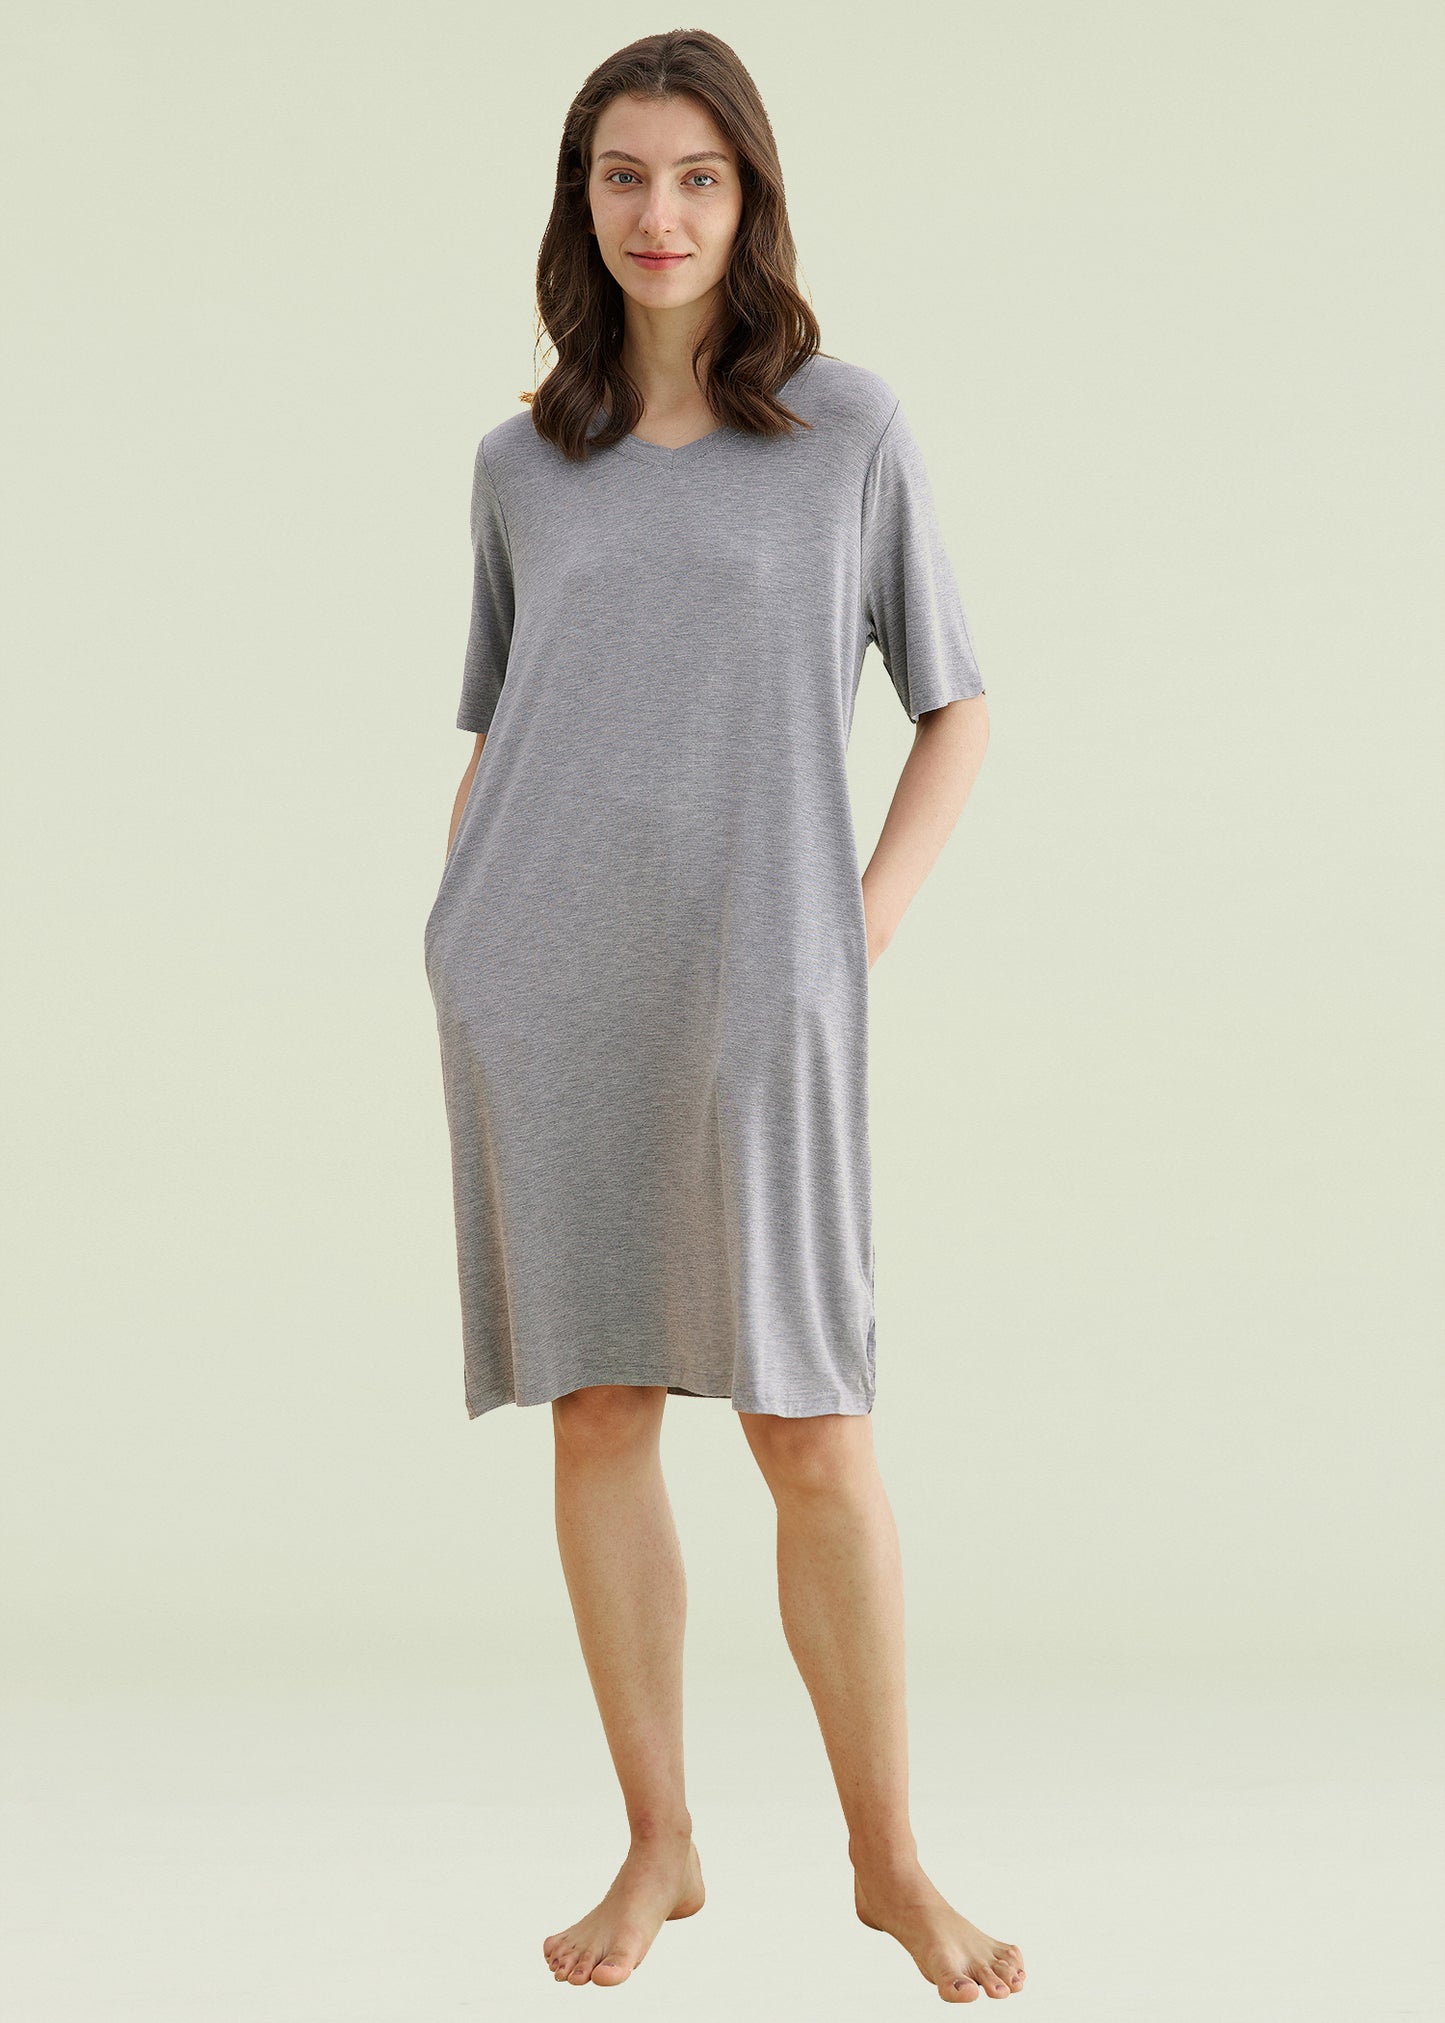 Women's Bamboo Viscose Nightgown V-Neck Sleep Shirt with Pockets